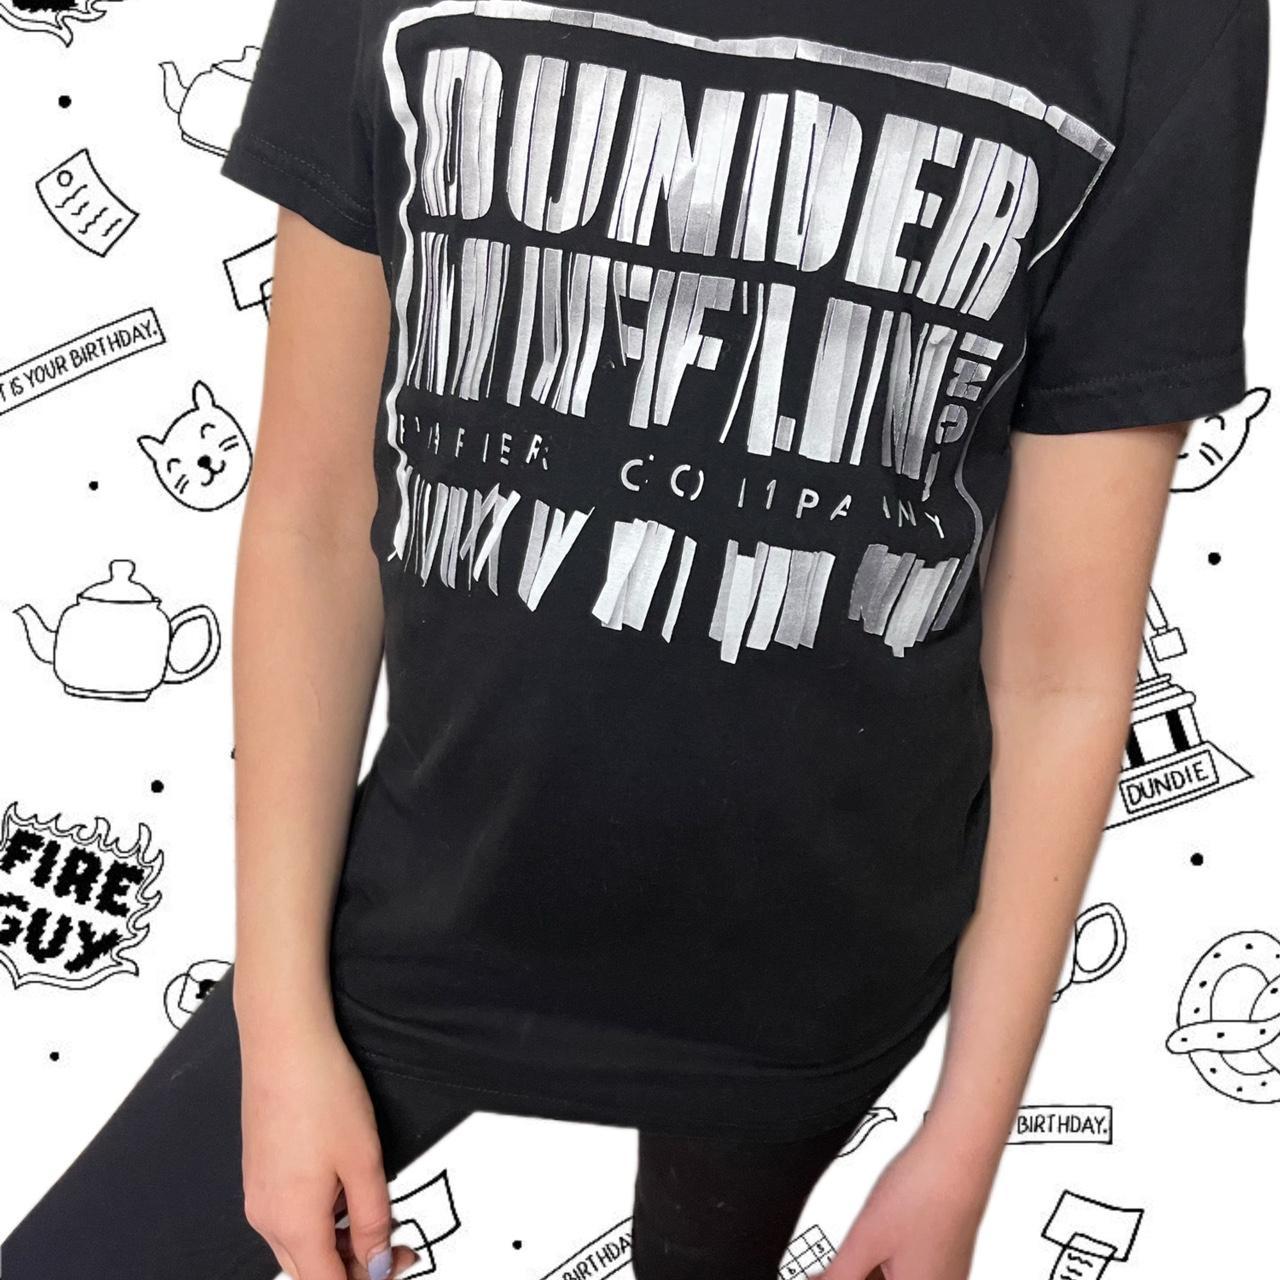 Dunder Mifflin T-Shirt – Red BAG Media